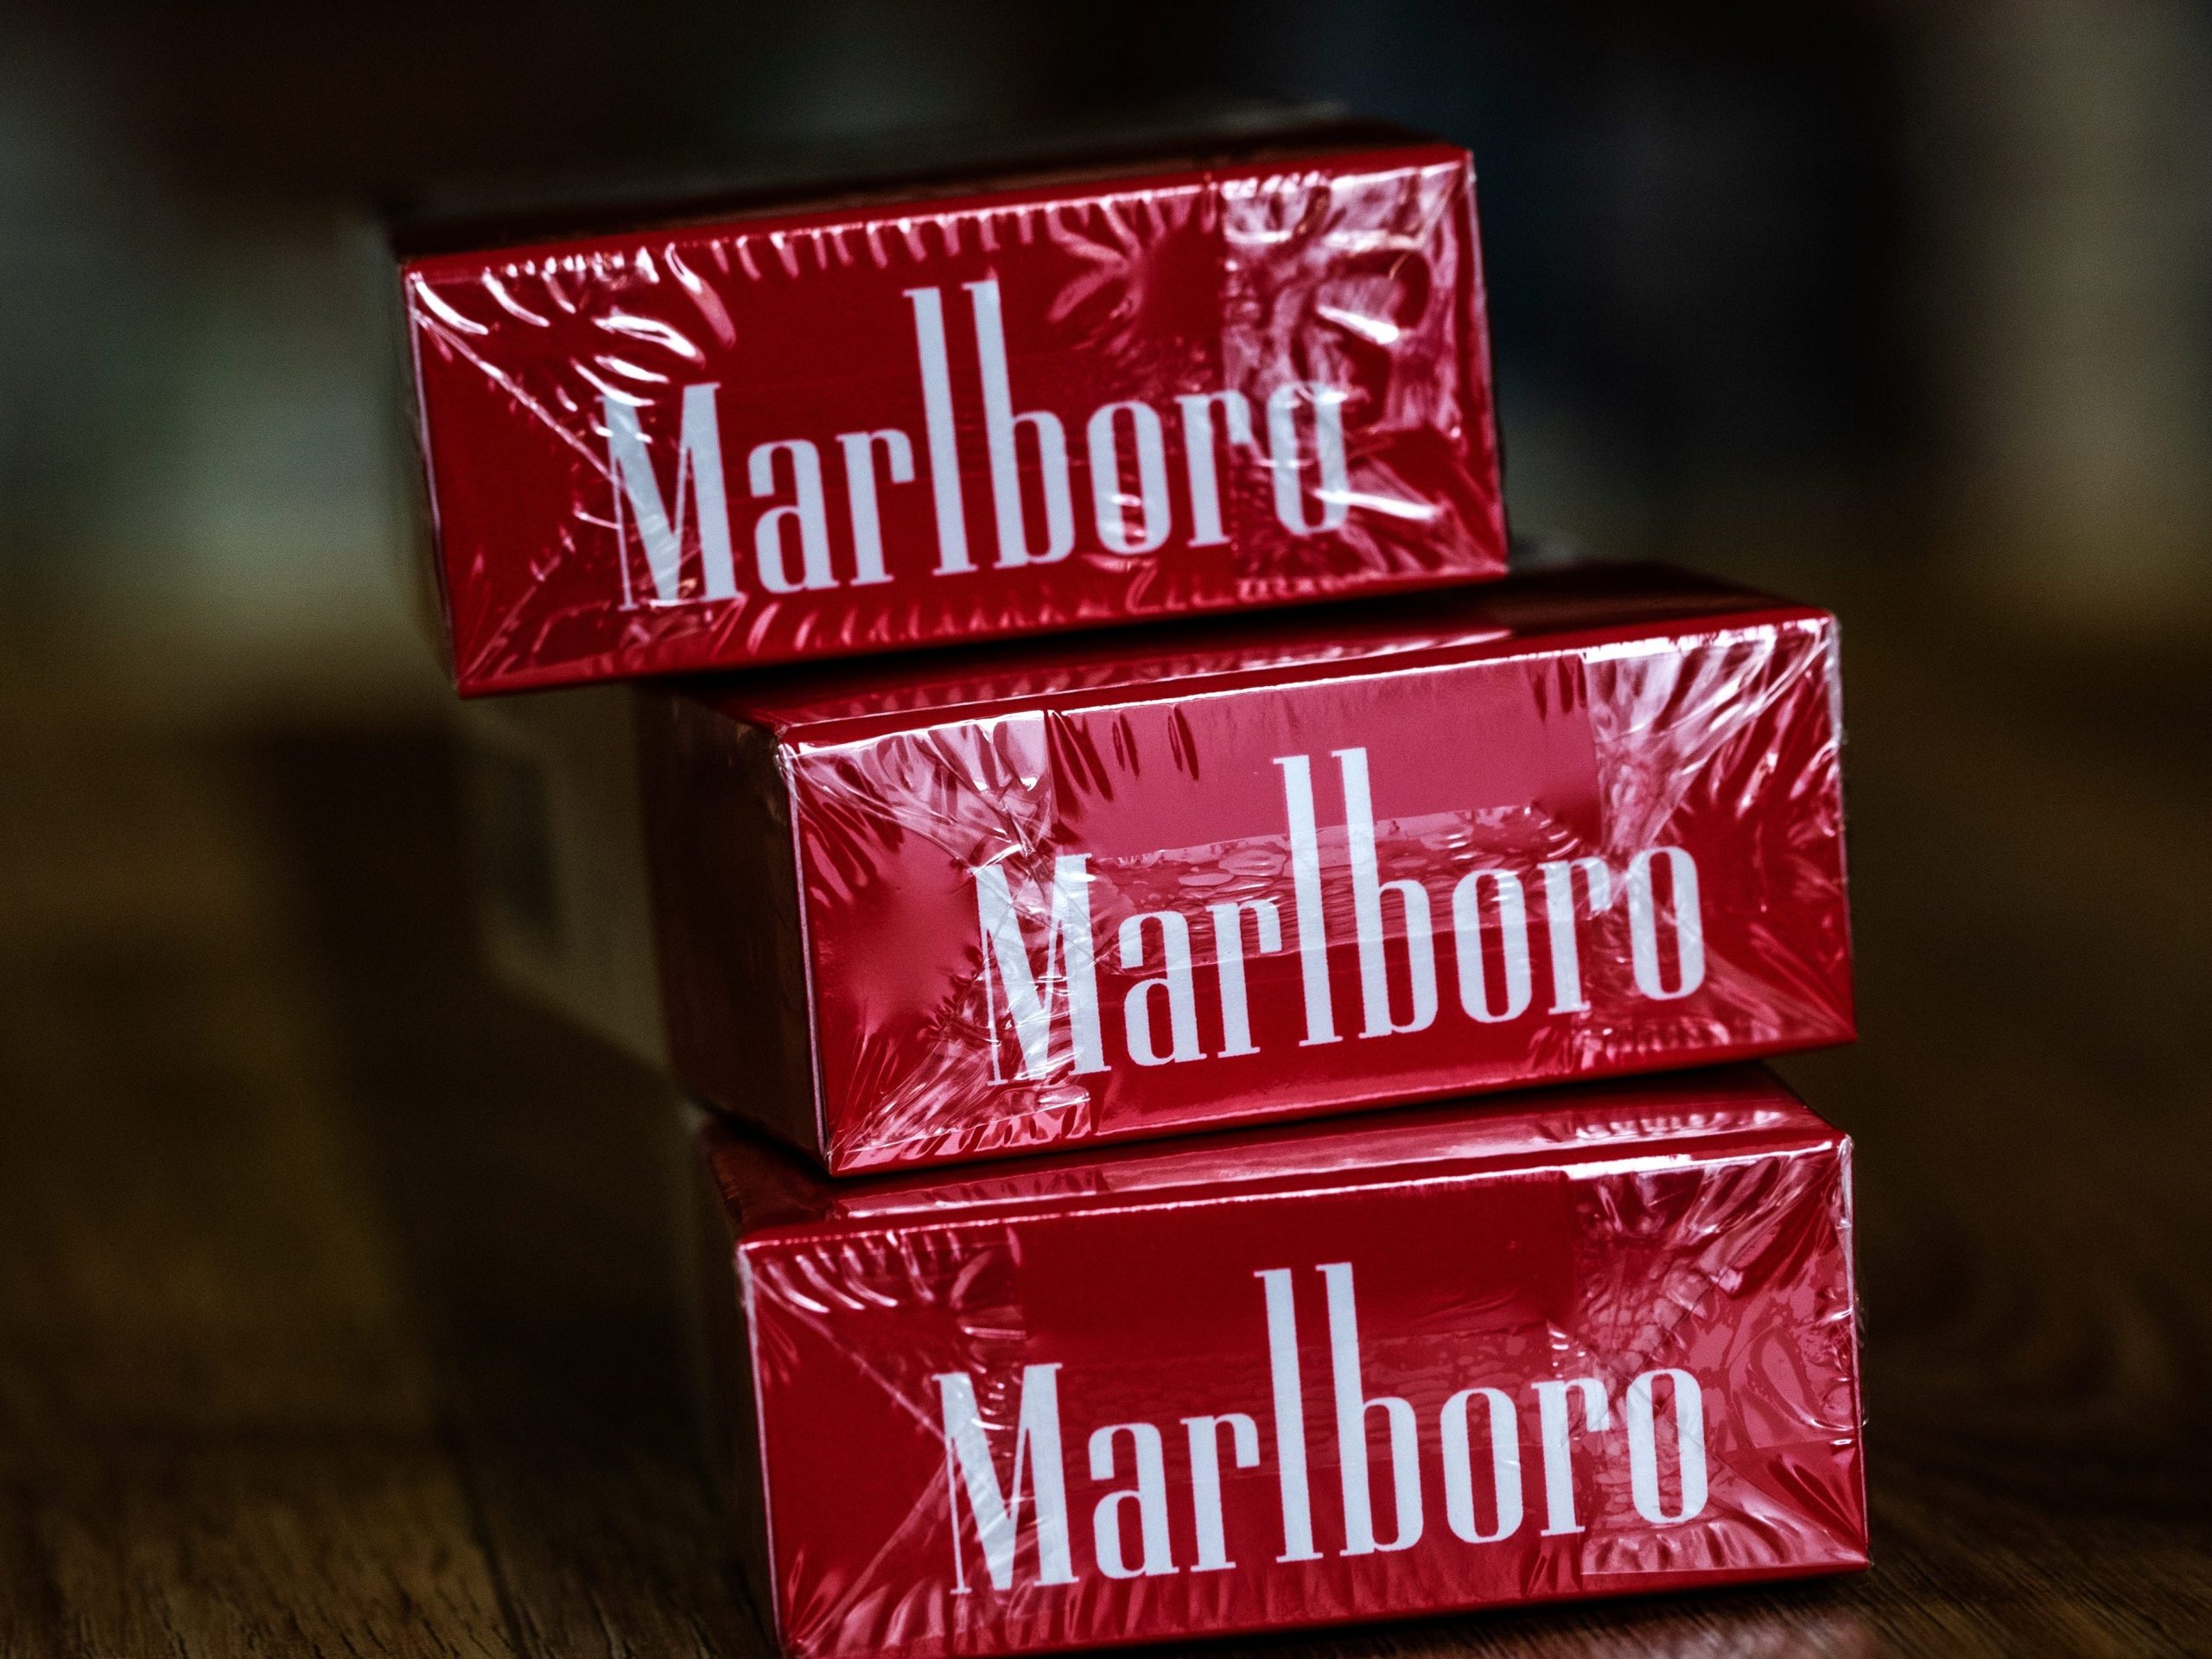 Three red packs of Marlboro cigarettes.